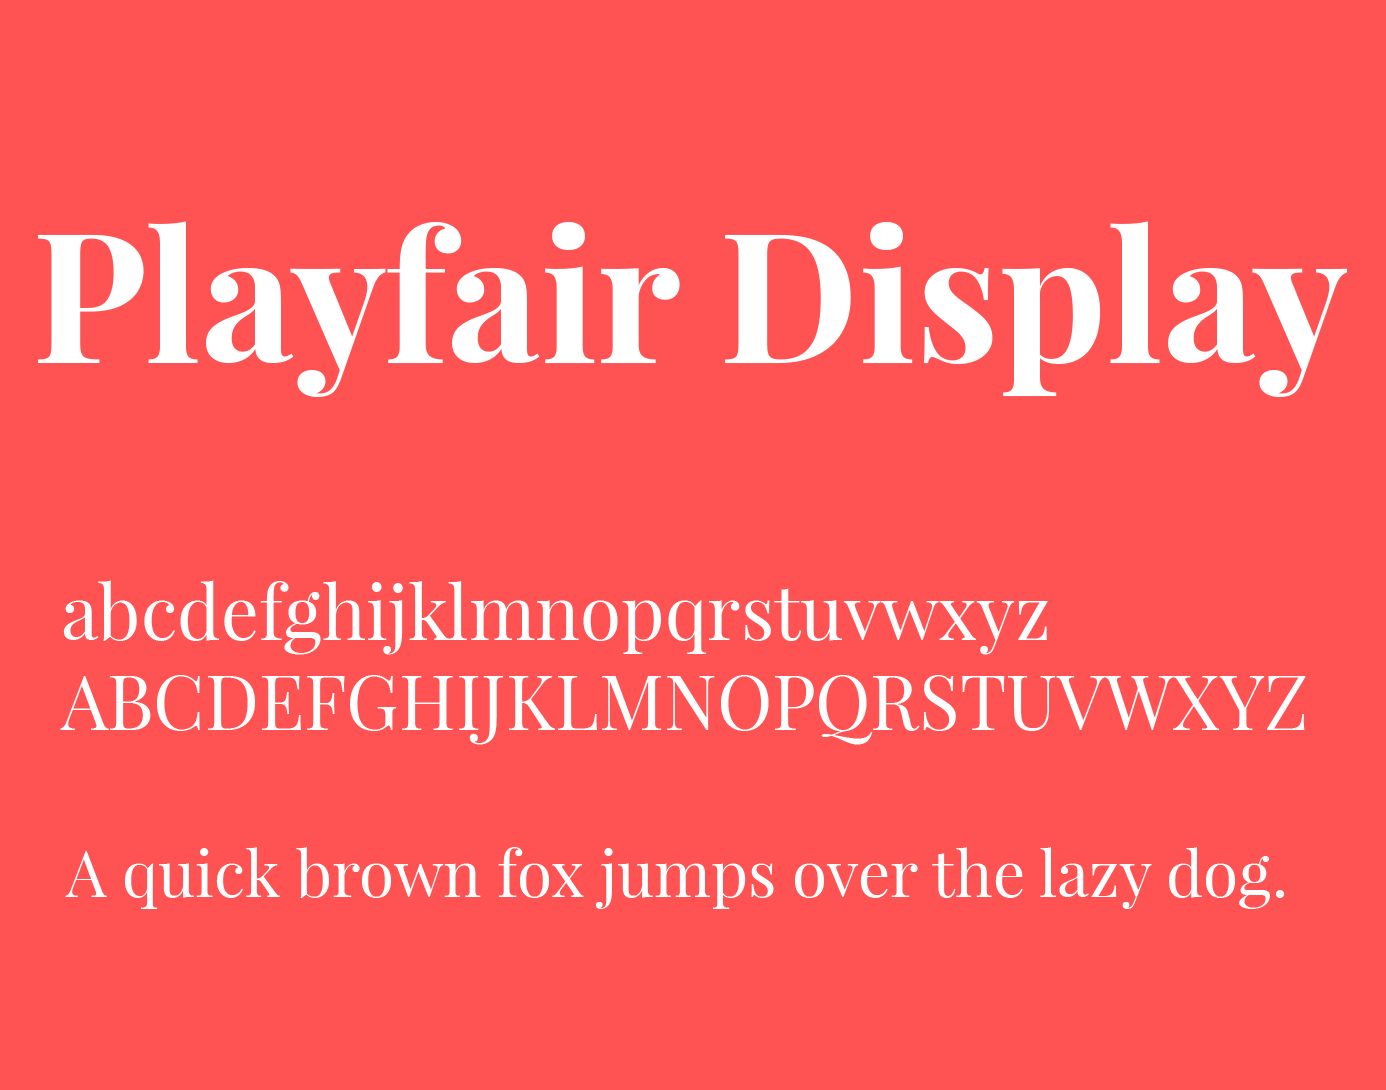 Playfair Display Font Free Download